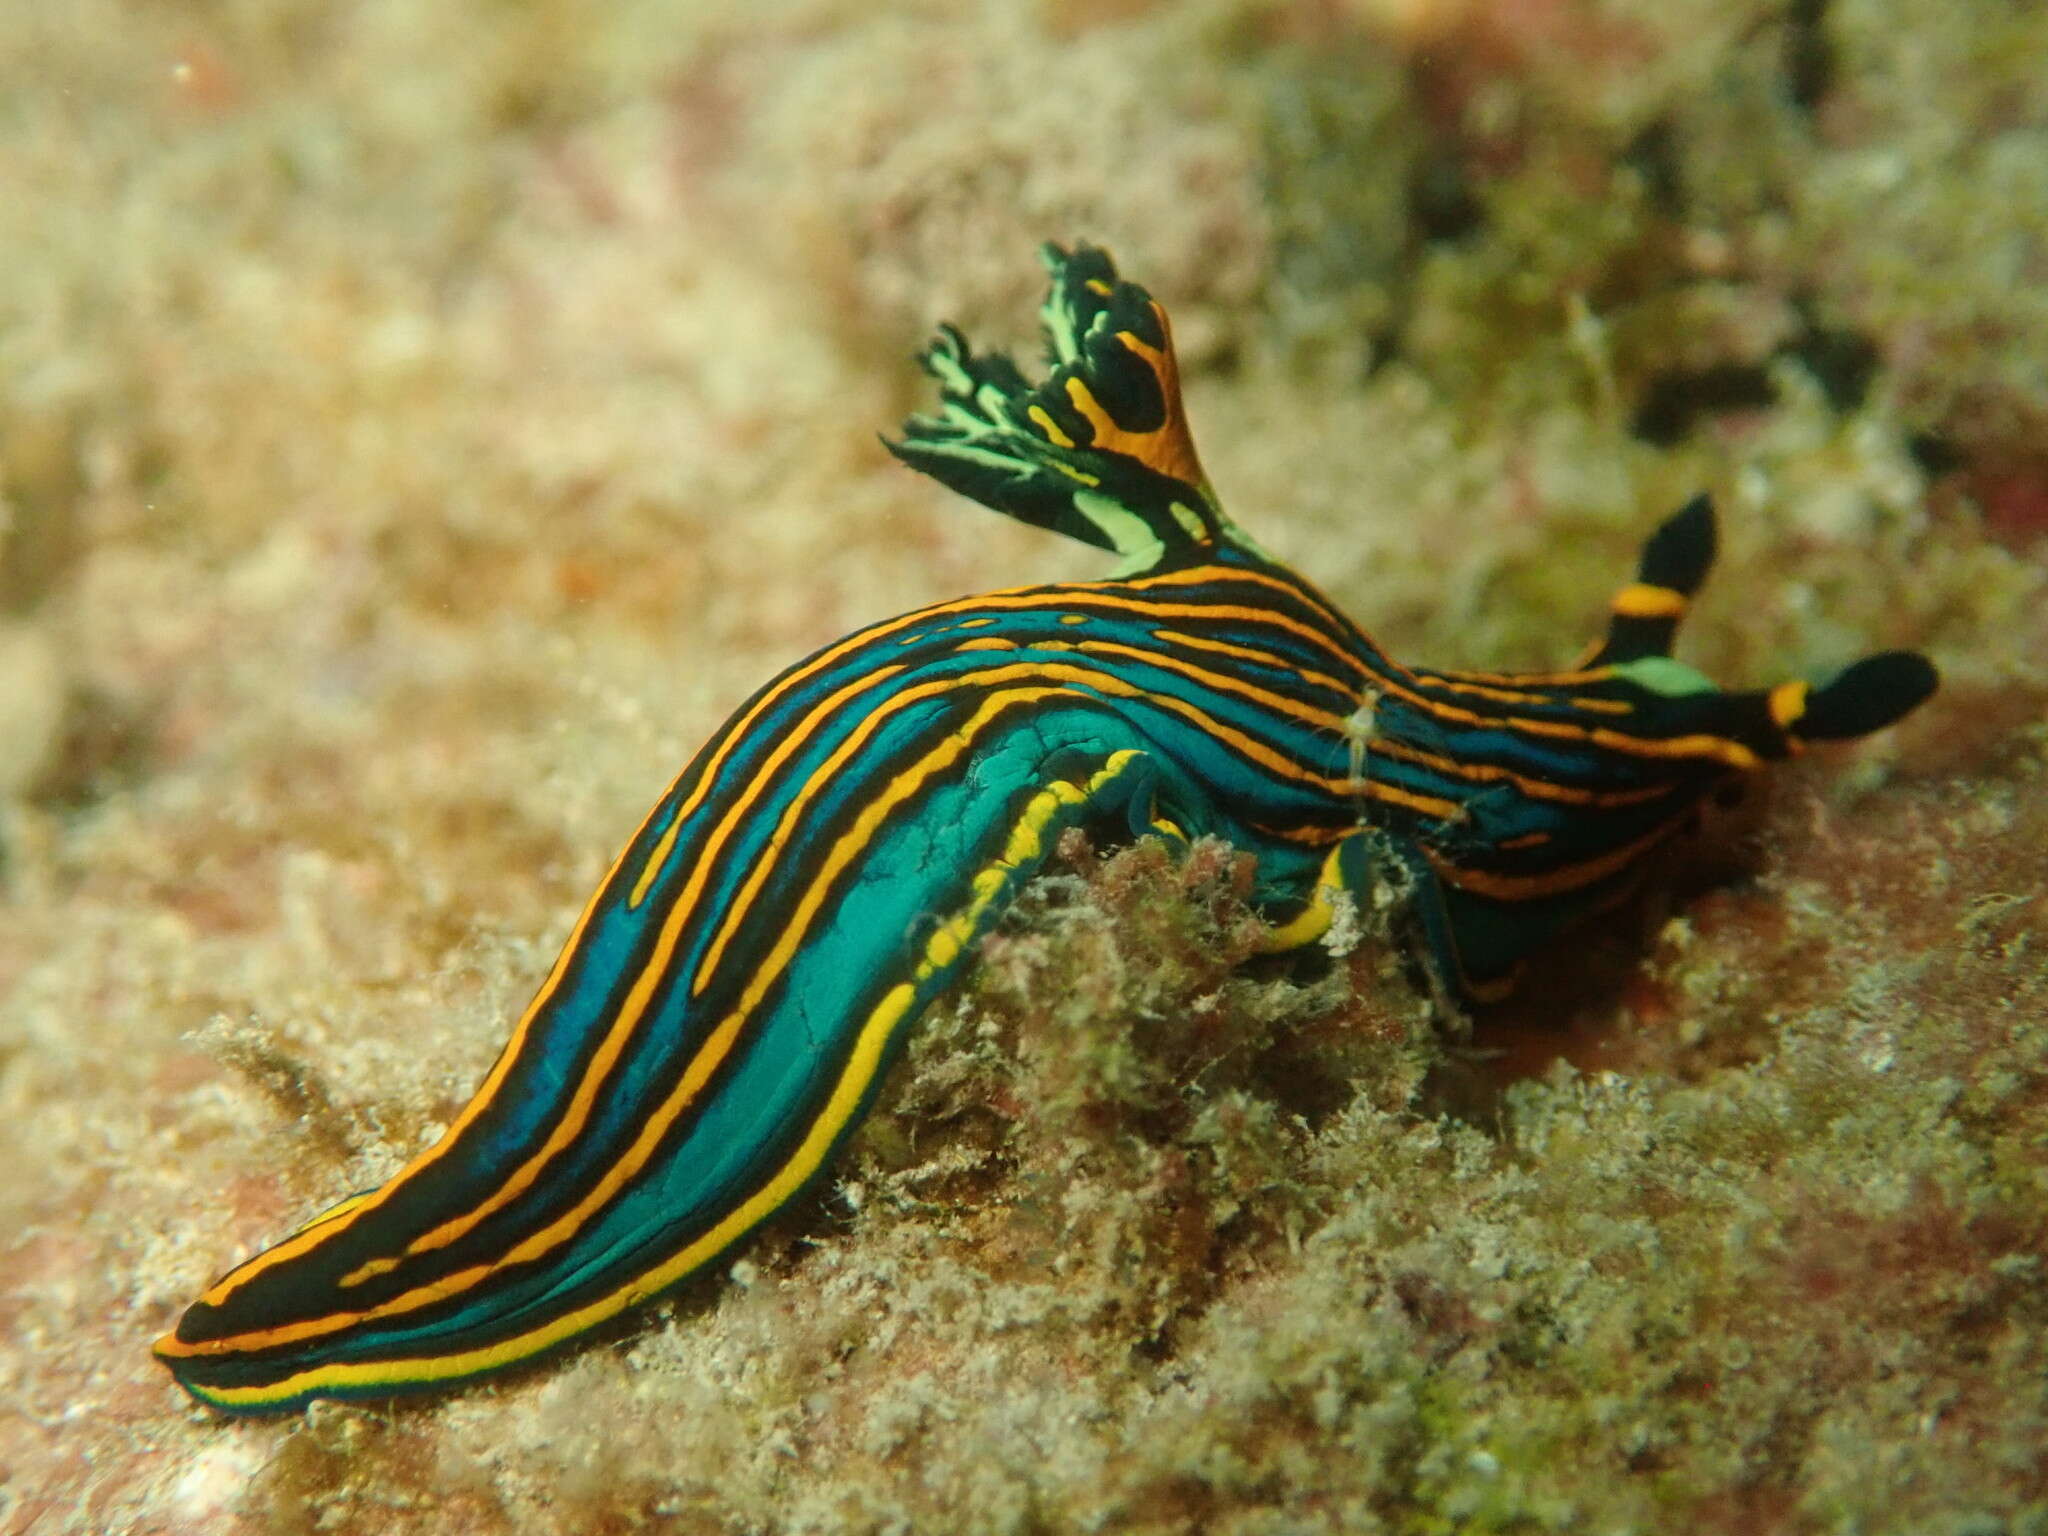 Image of Gold and green lined slug